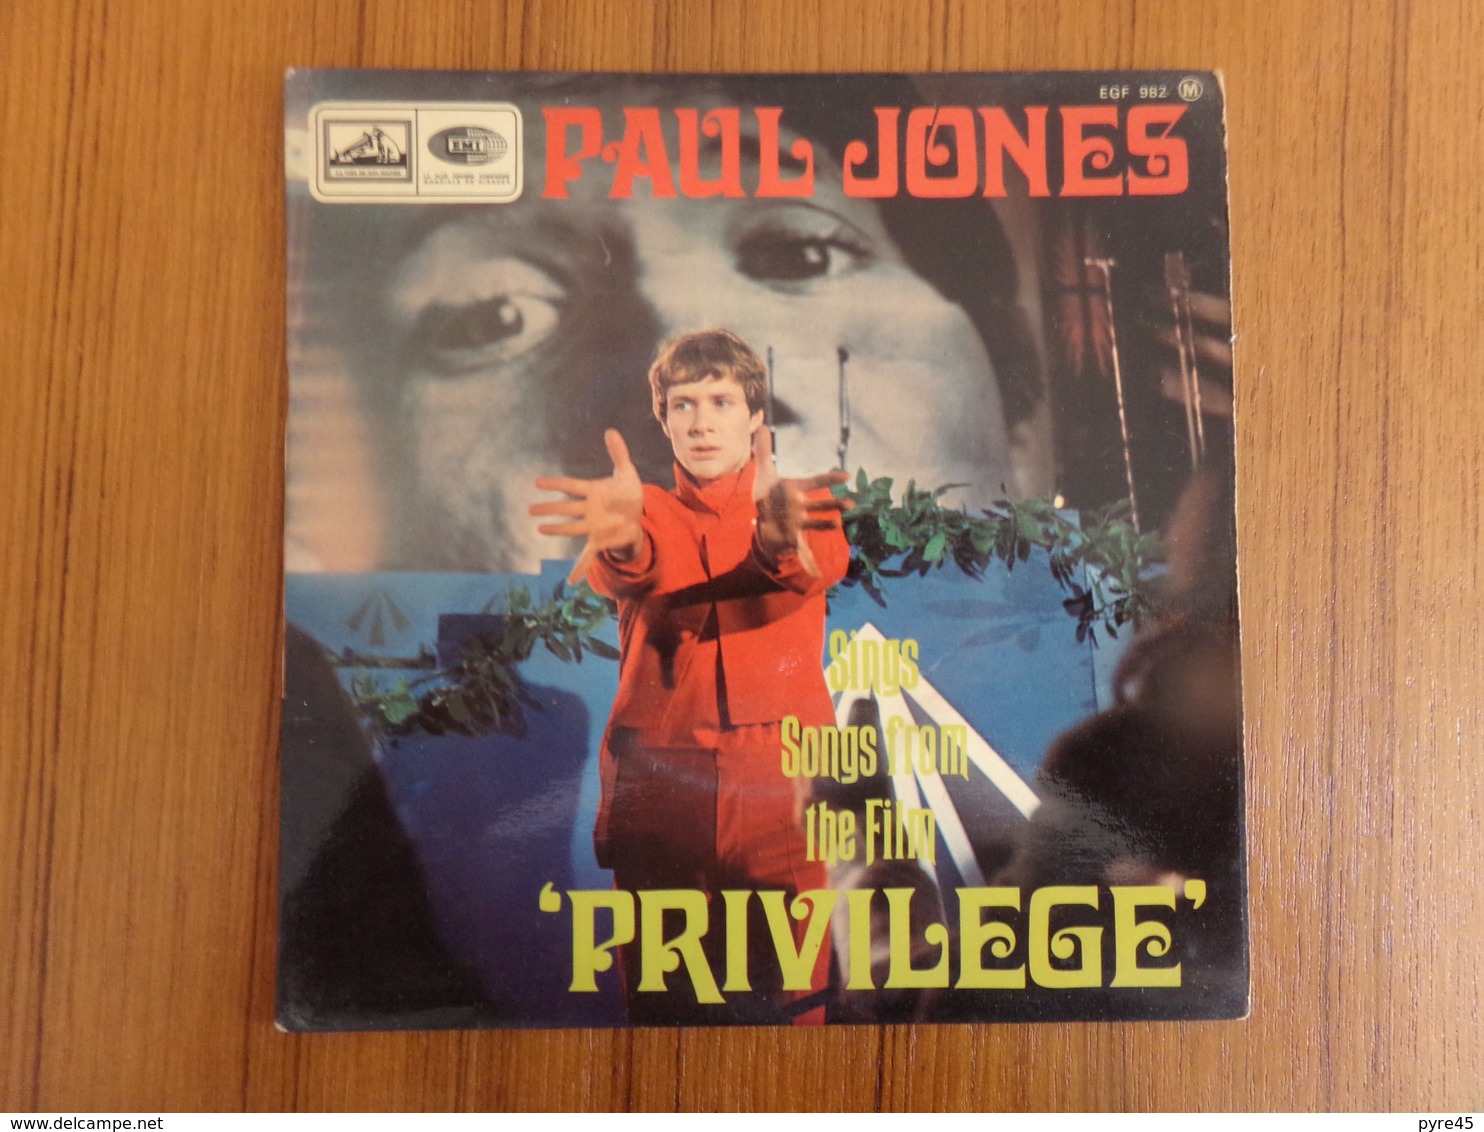 45 TOURS PAUL JONES PATHE EGF 982 PRIVILEGE / BREAKING / FREE ME / I VE BEEN A BAD BAD BOY DU FILM PRIVILEGE - Soundtracks, Film Music